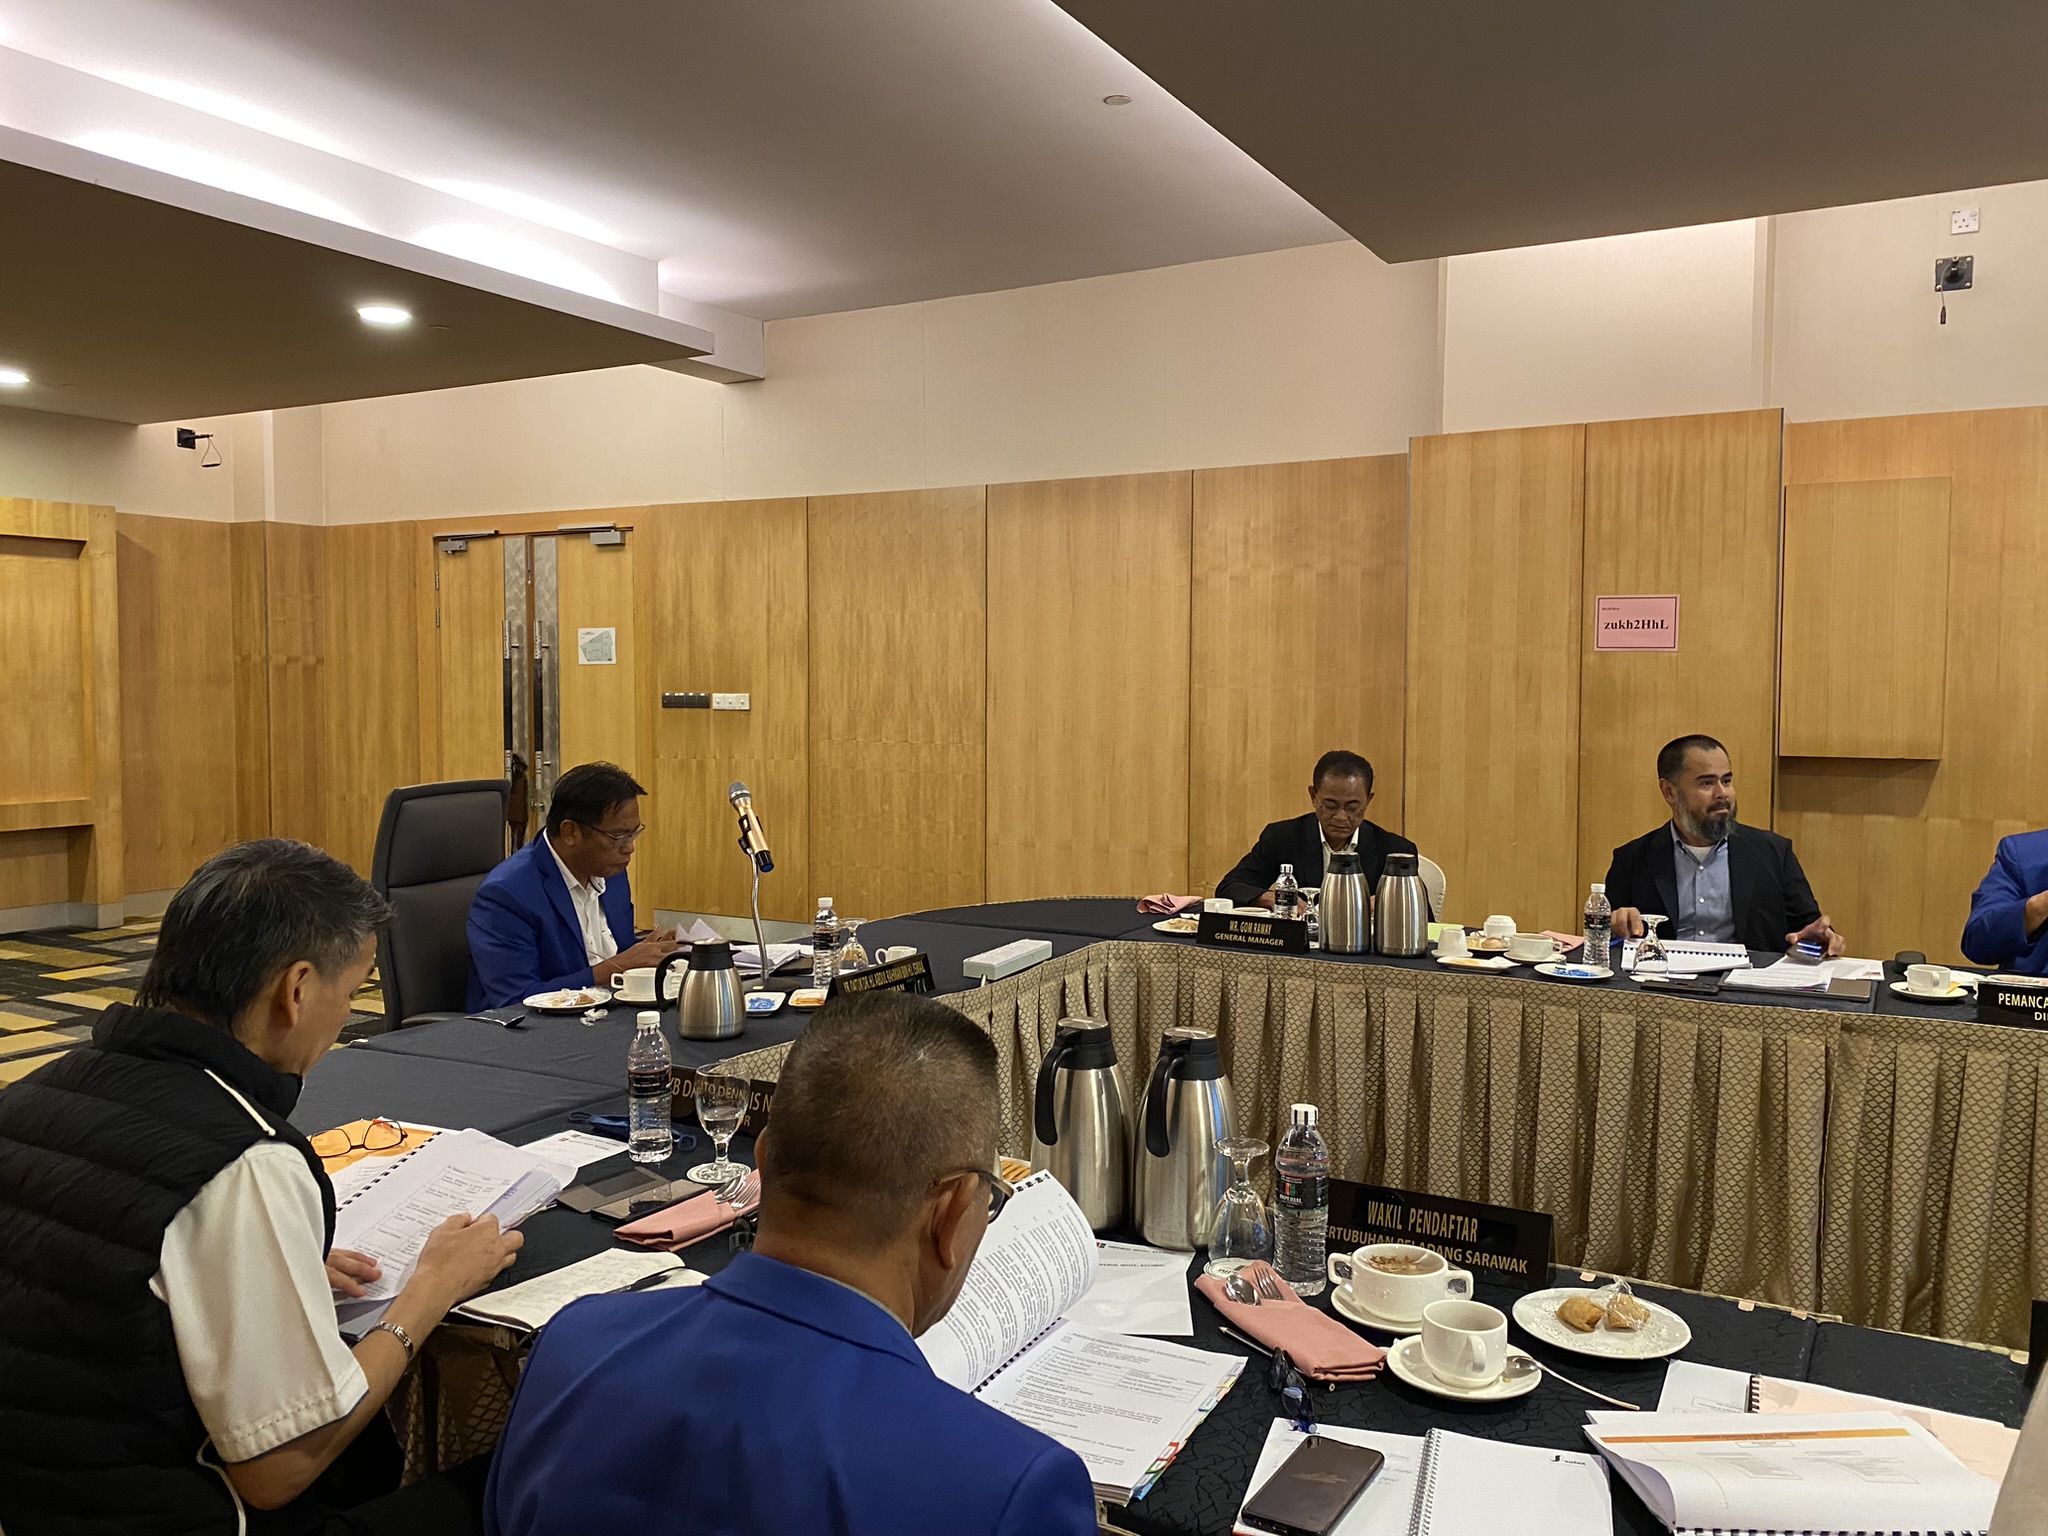 PPNS Board of Directors’ Meeting